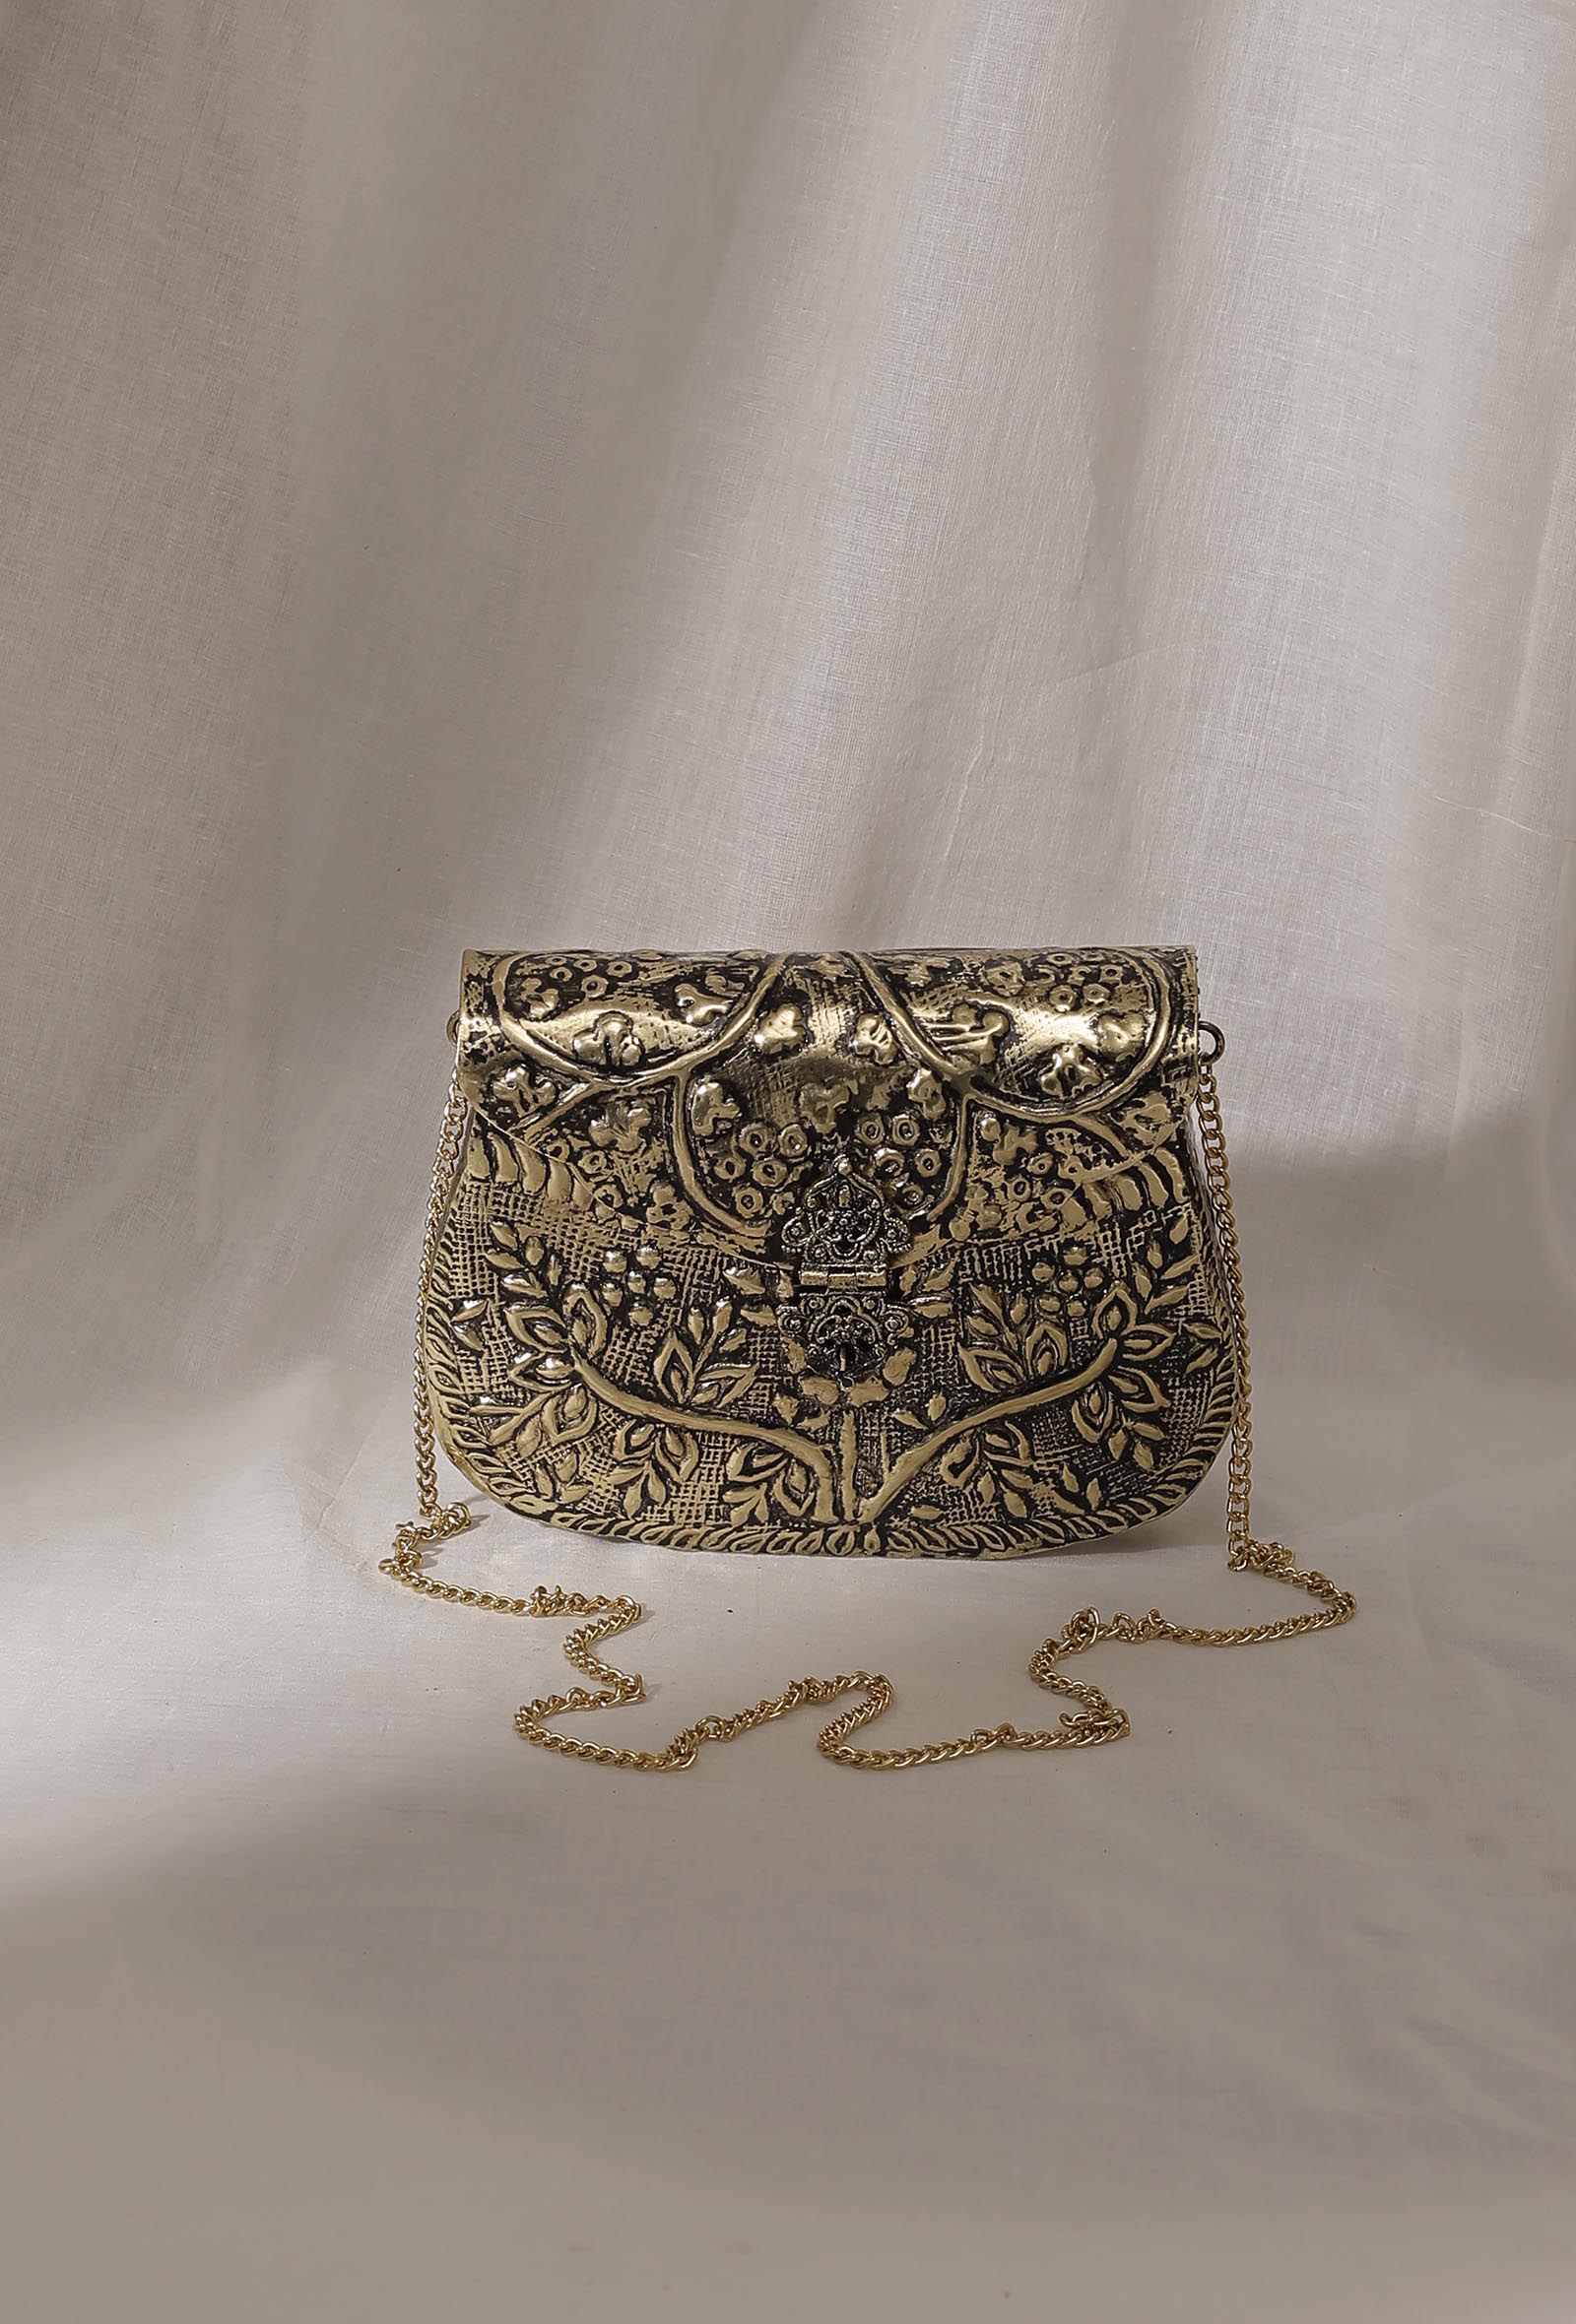 Shakuntla Textiles Women's Antique Brass Purse Ethnic Handmade Metal Clutch  Bag (Size : 20 X 12 Cm) Silver